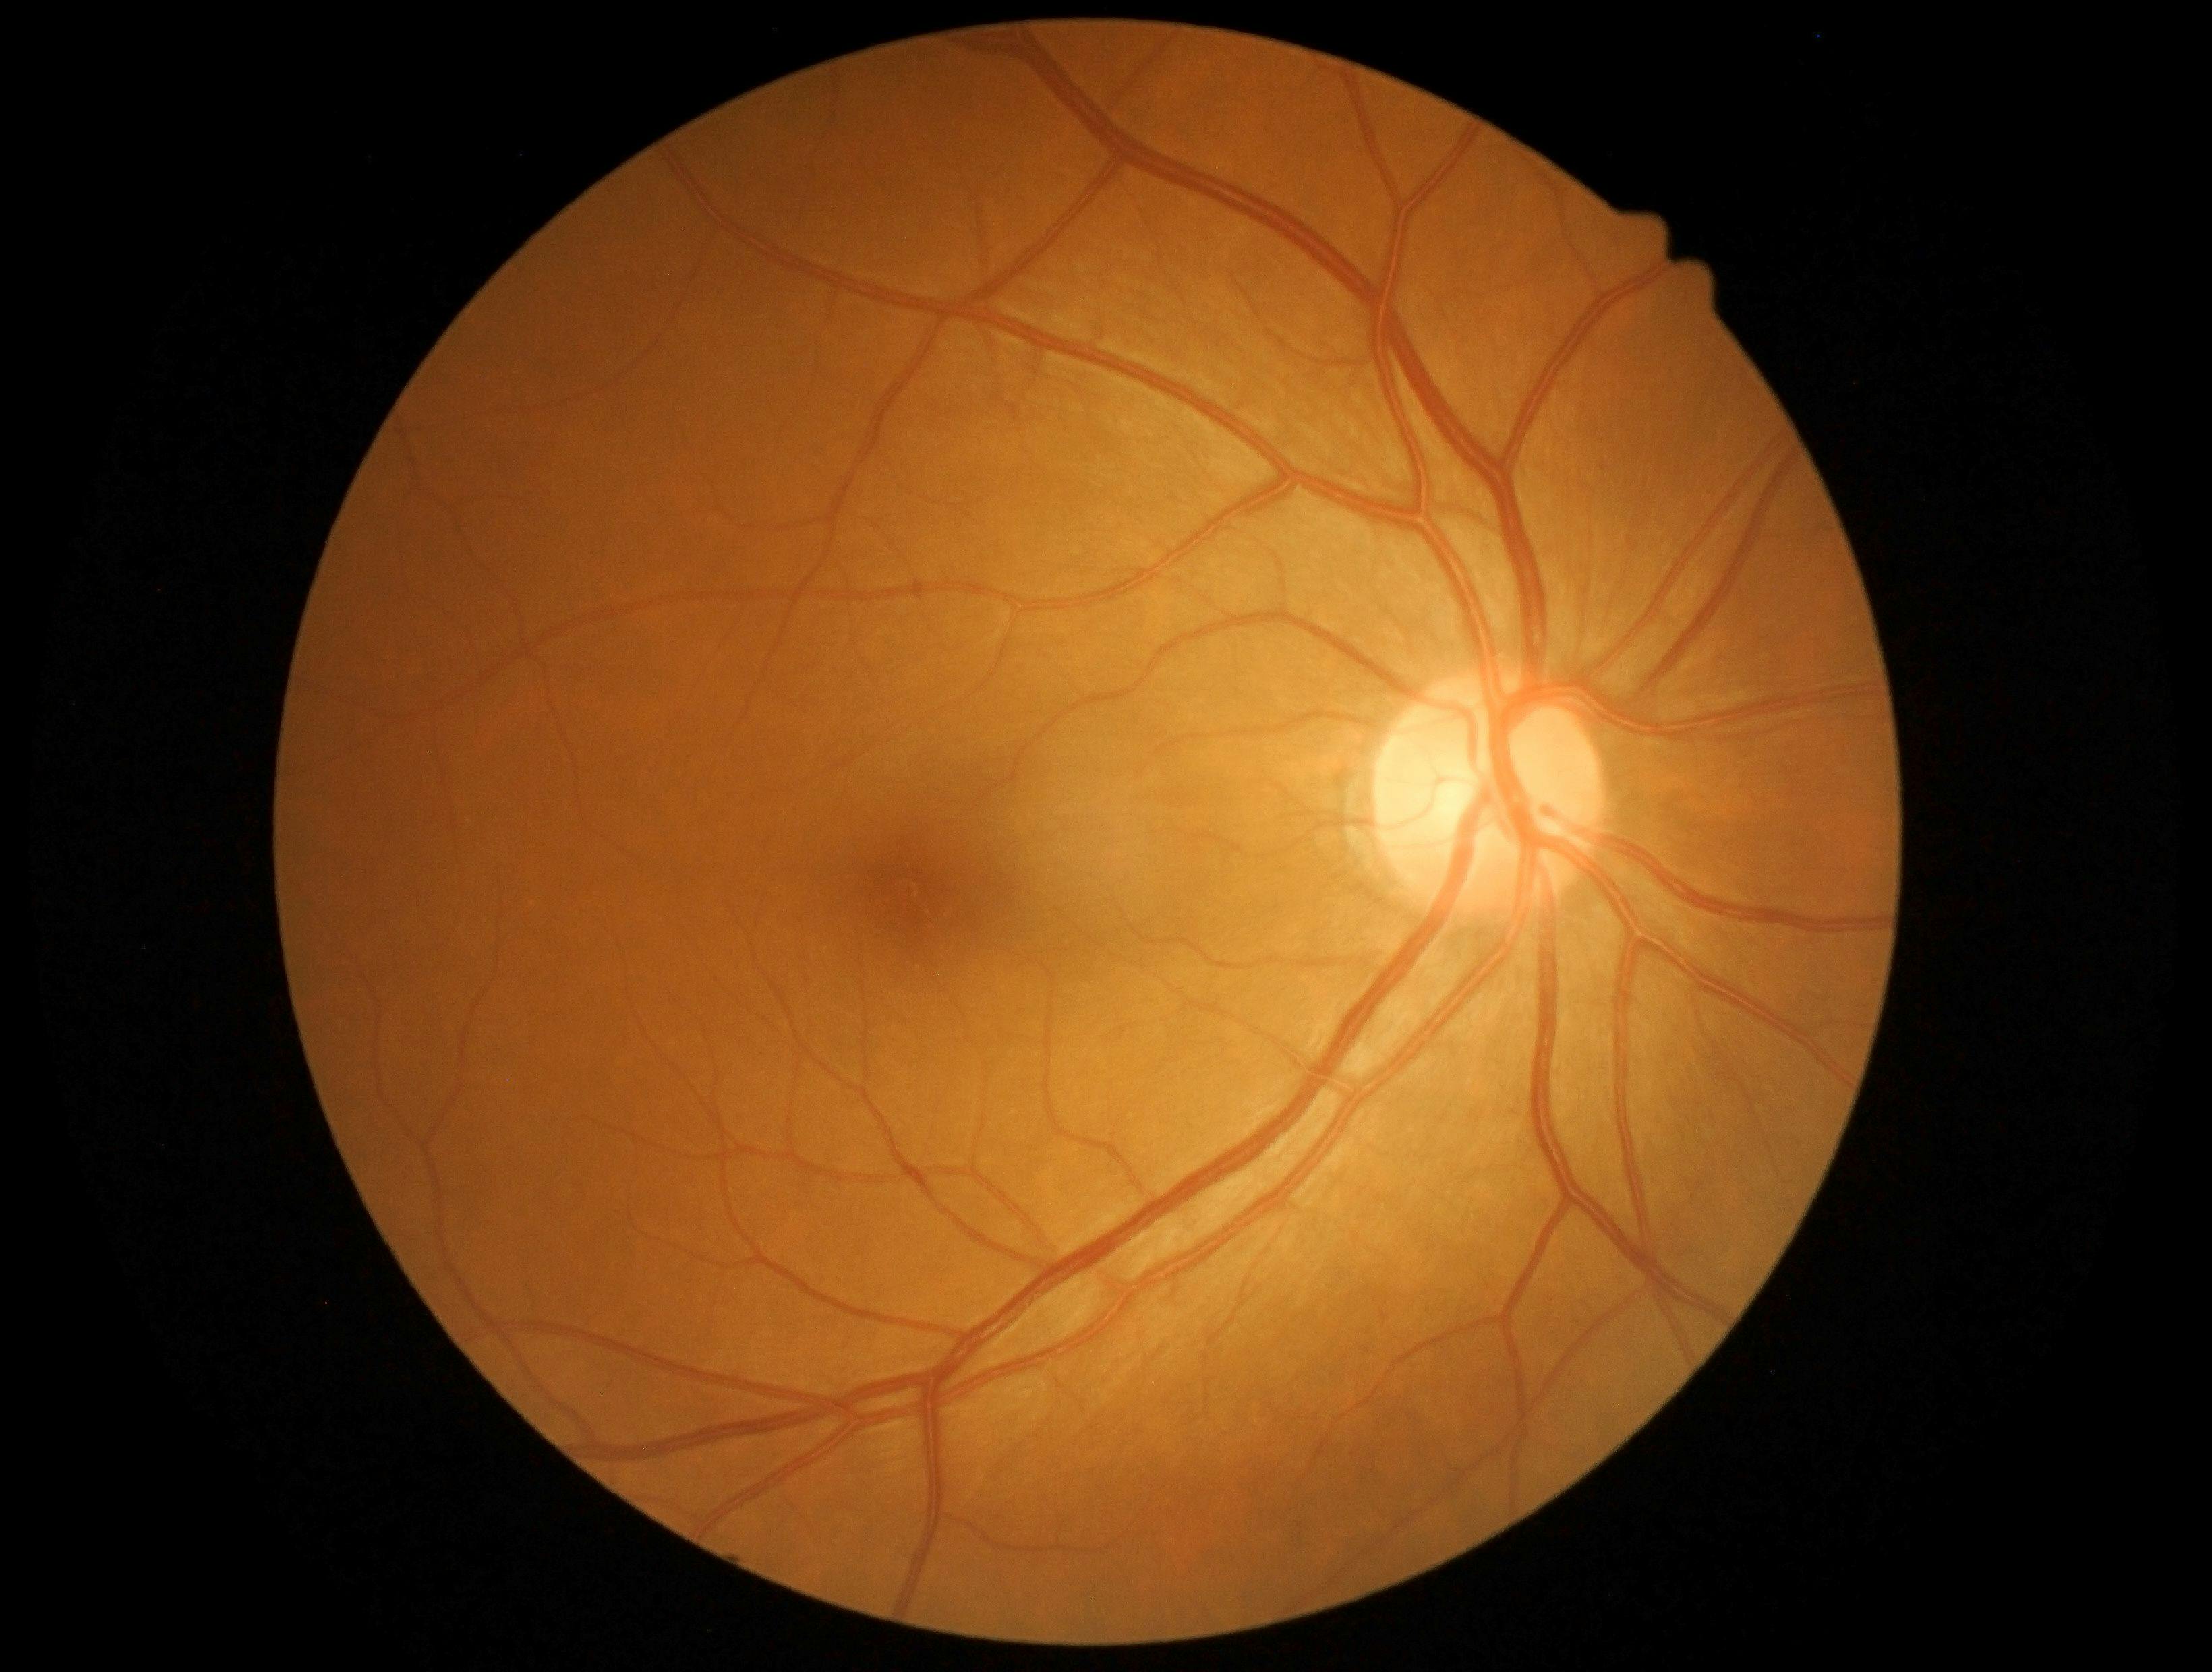 Retina and optic nerve | Image credit: memorisz - stock.adobe.com